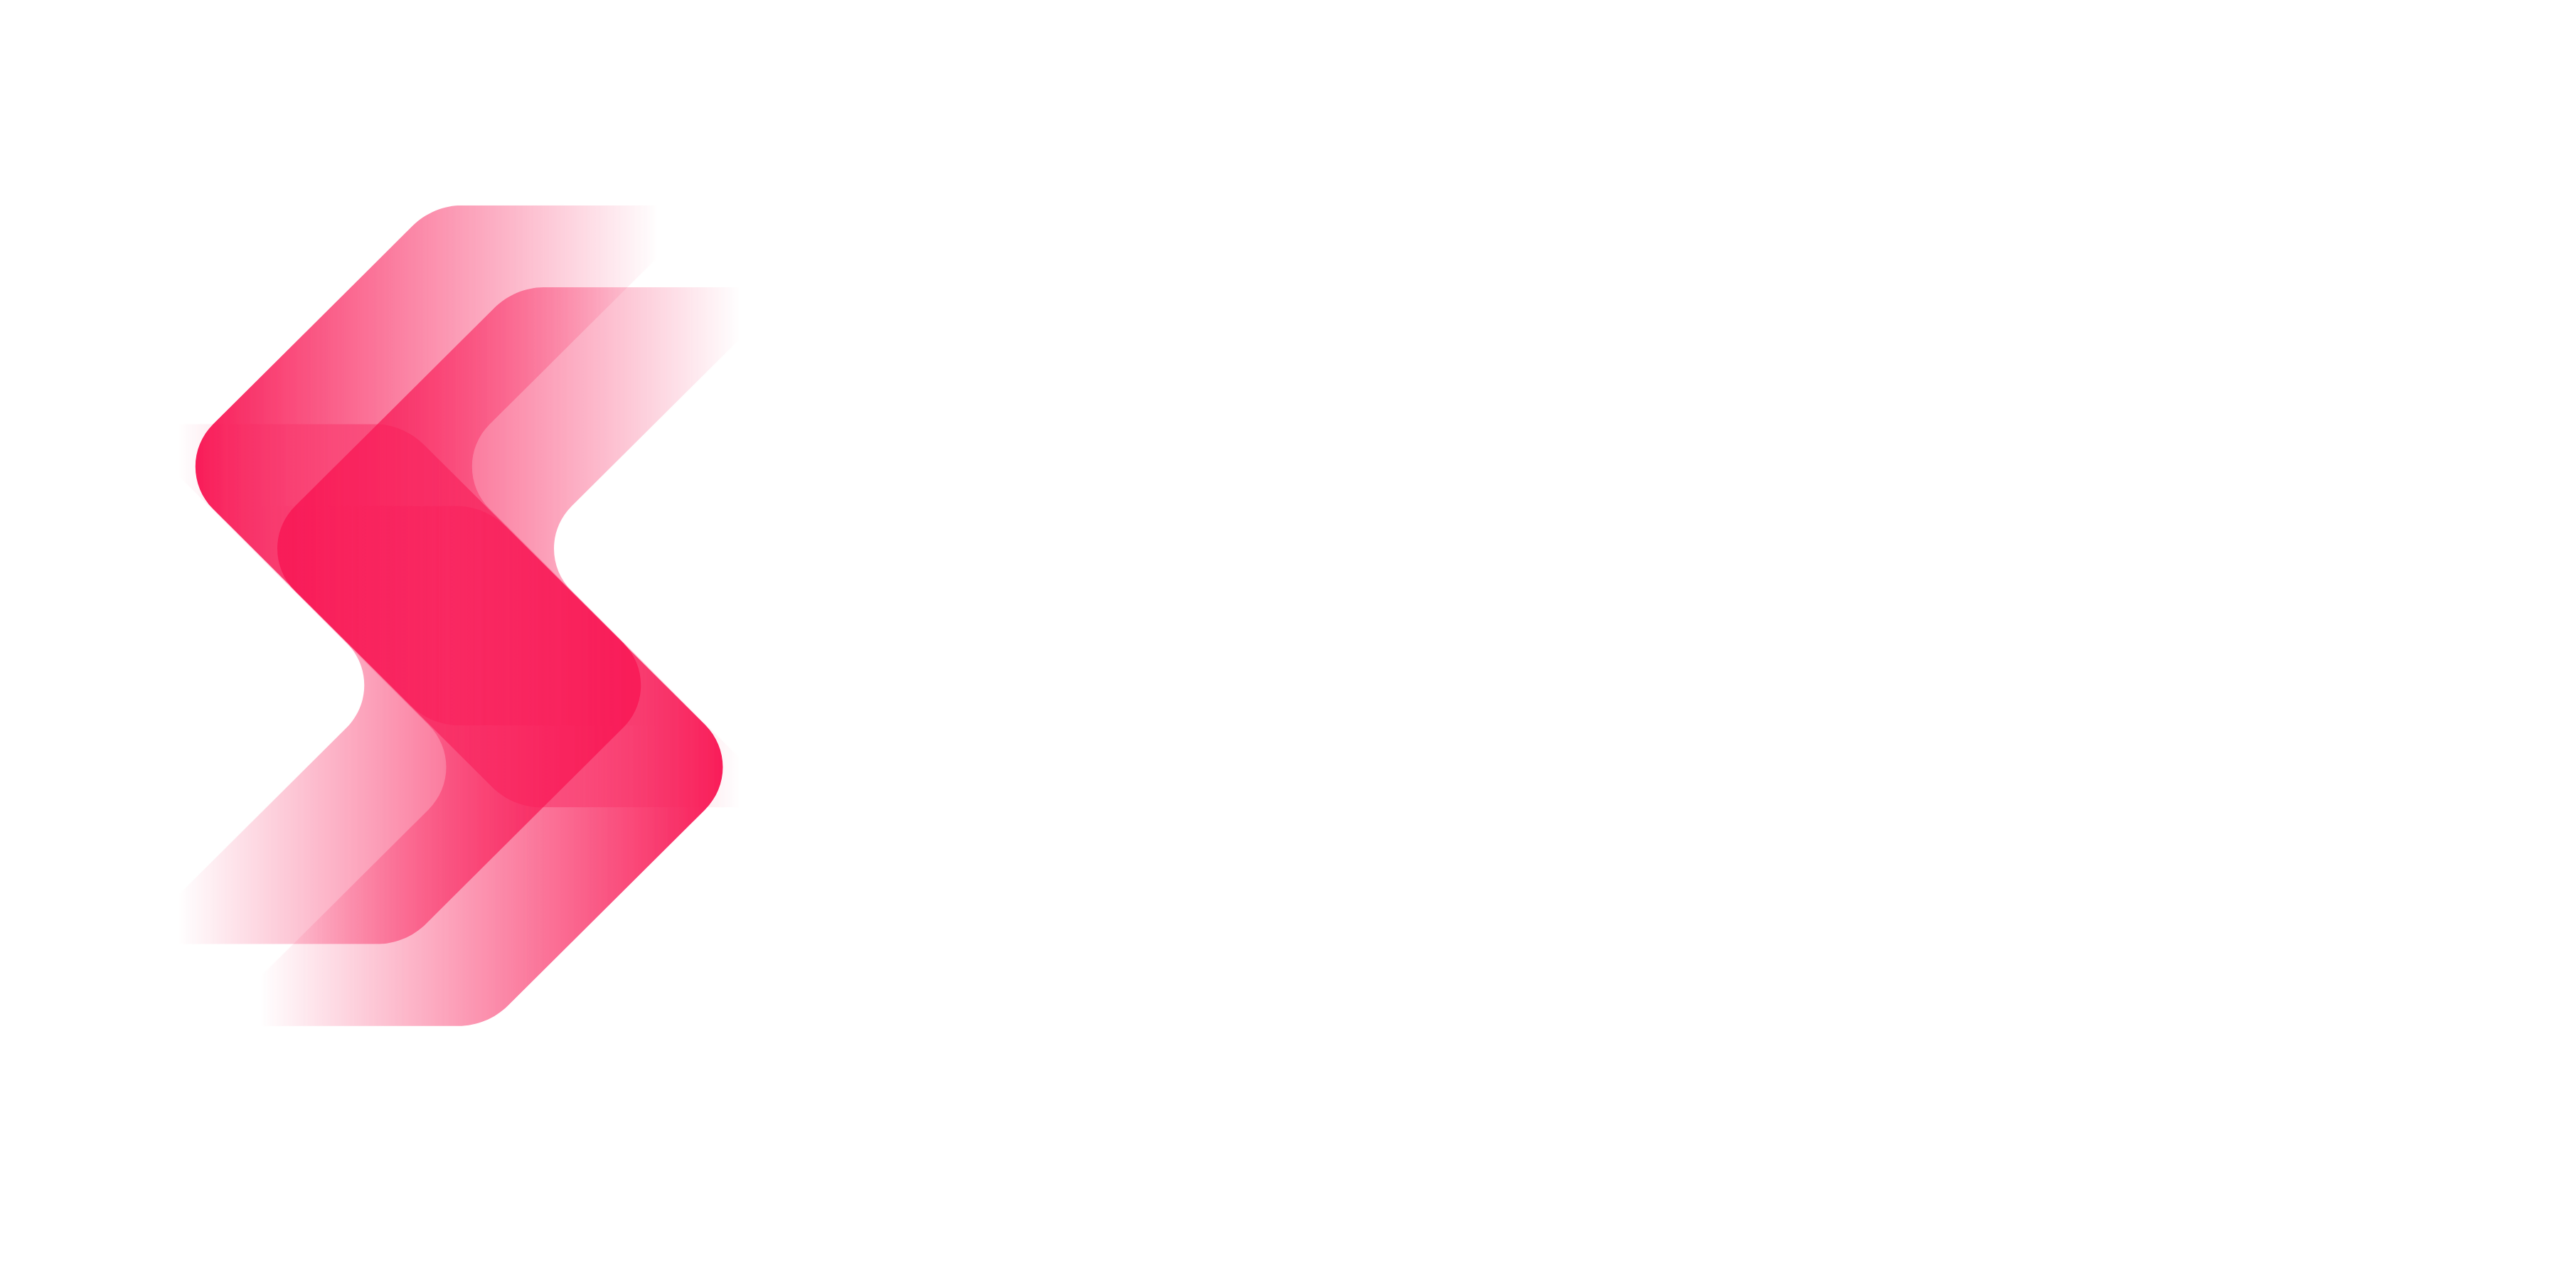 Spiking (1200 × 600 px)